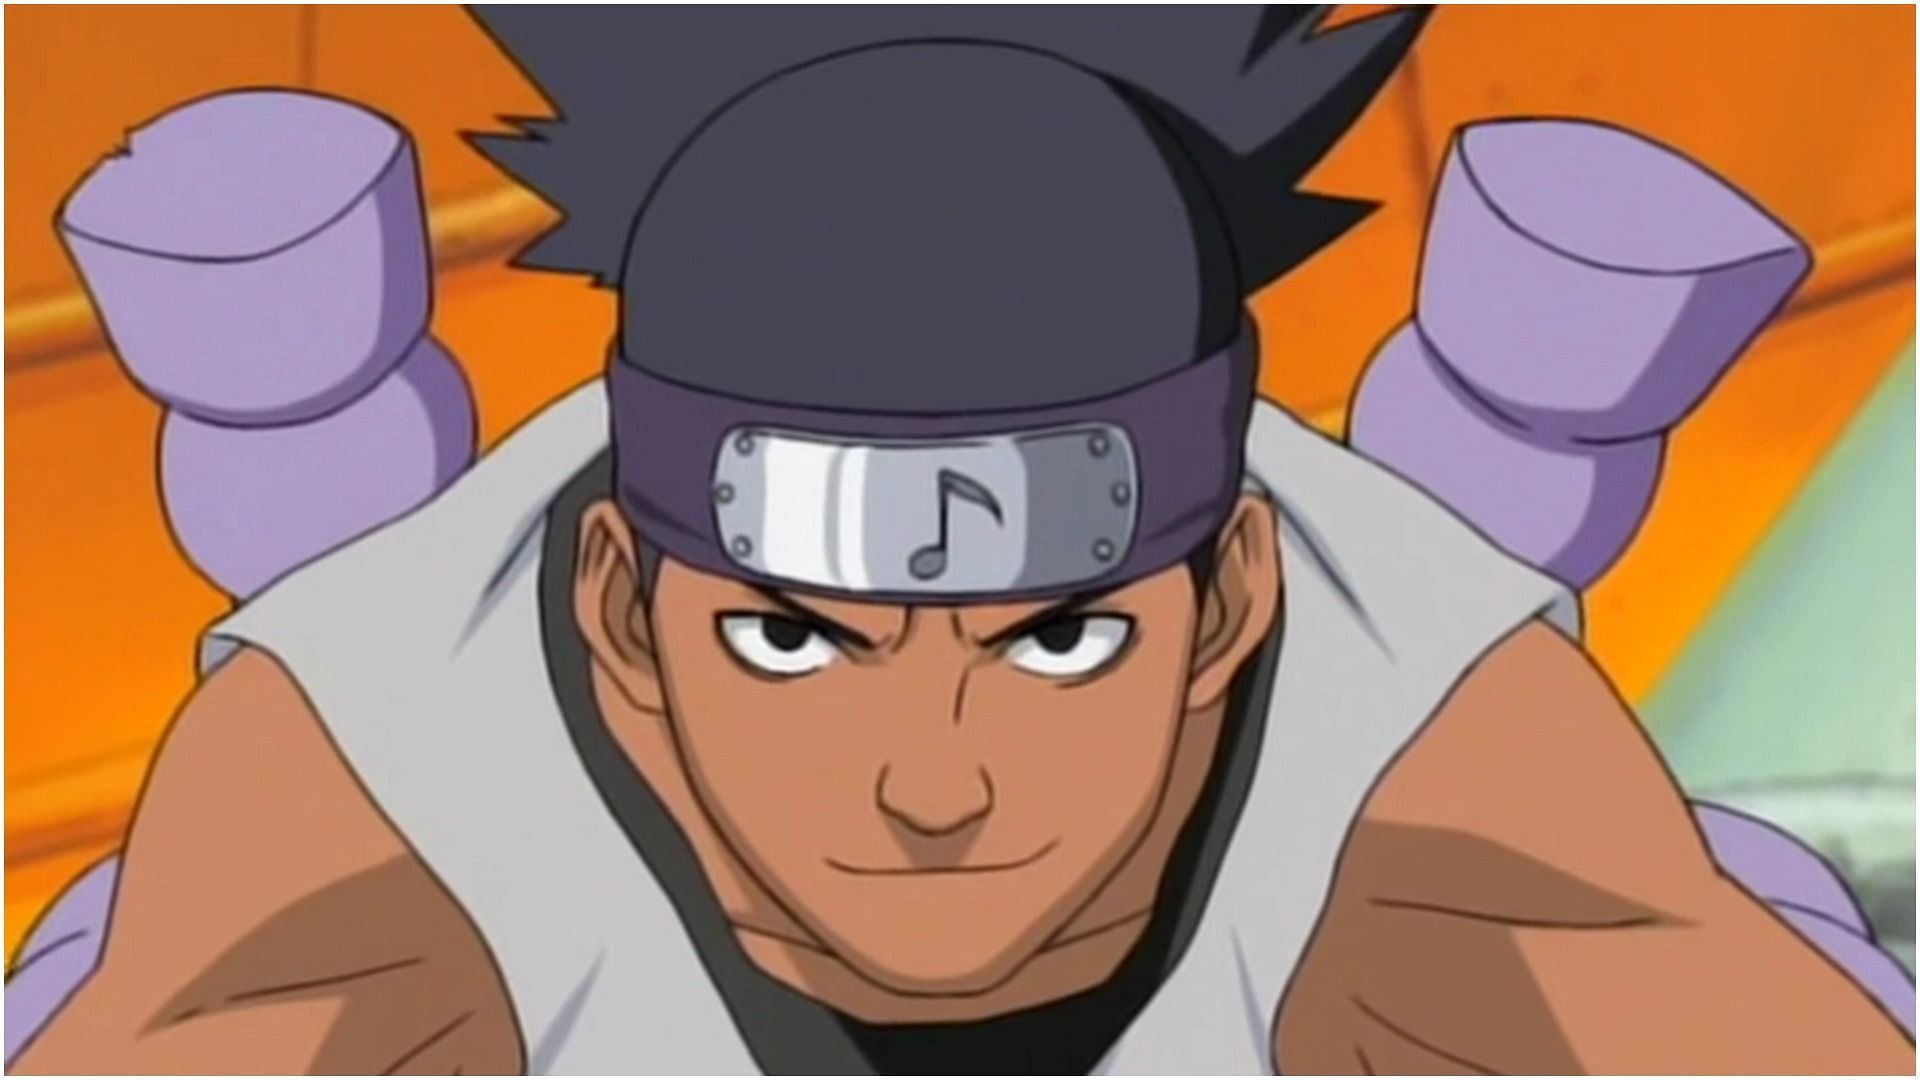 Kidomaru as seen in Naruto (Image via Studio Pierrot)